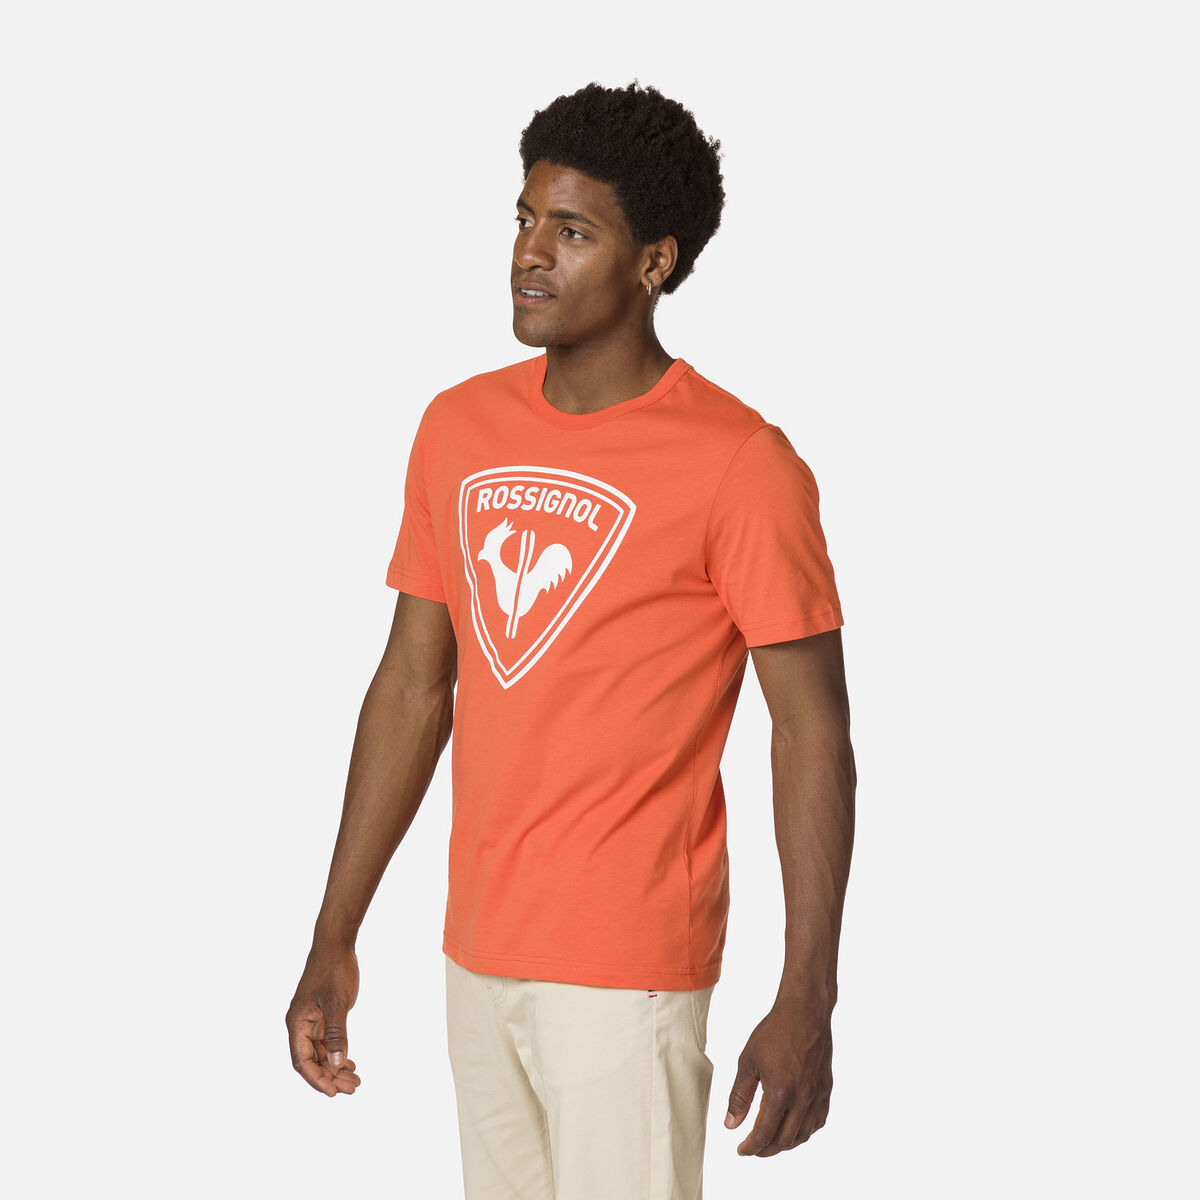 Rossignol Logo Rossignol Herren-T-Shirt Orange